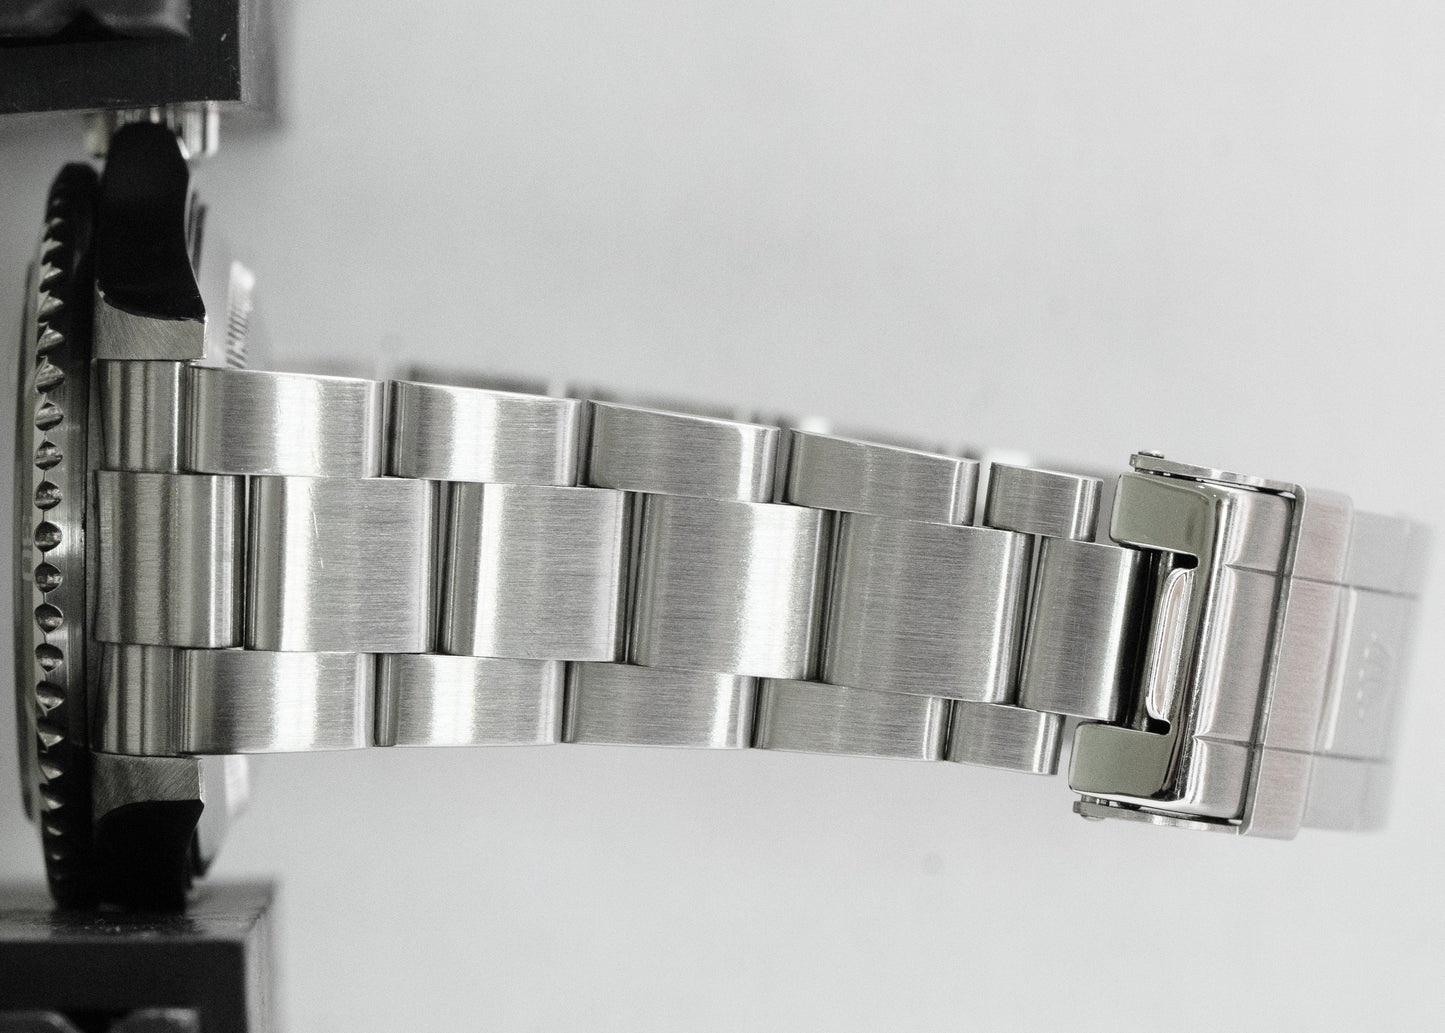 FLAT 4 UNPOLISHED Rolex Submariner Date KERMIT Stainless Steel Watch 16610 LV